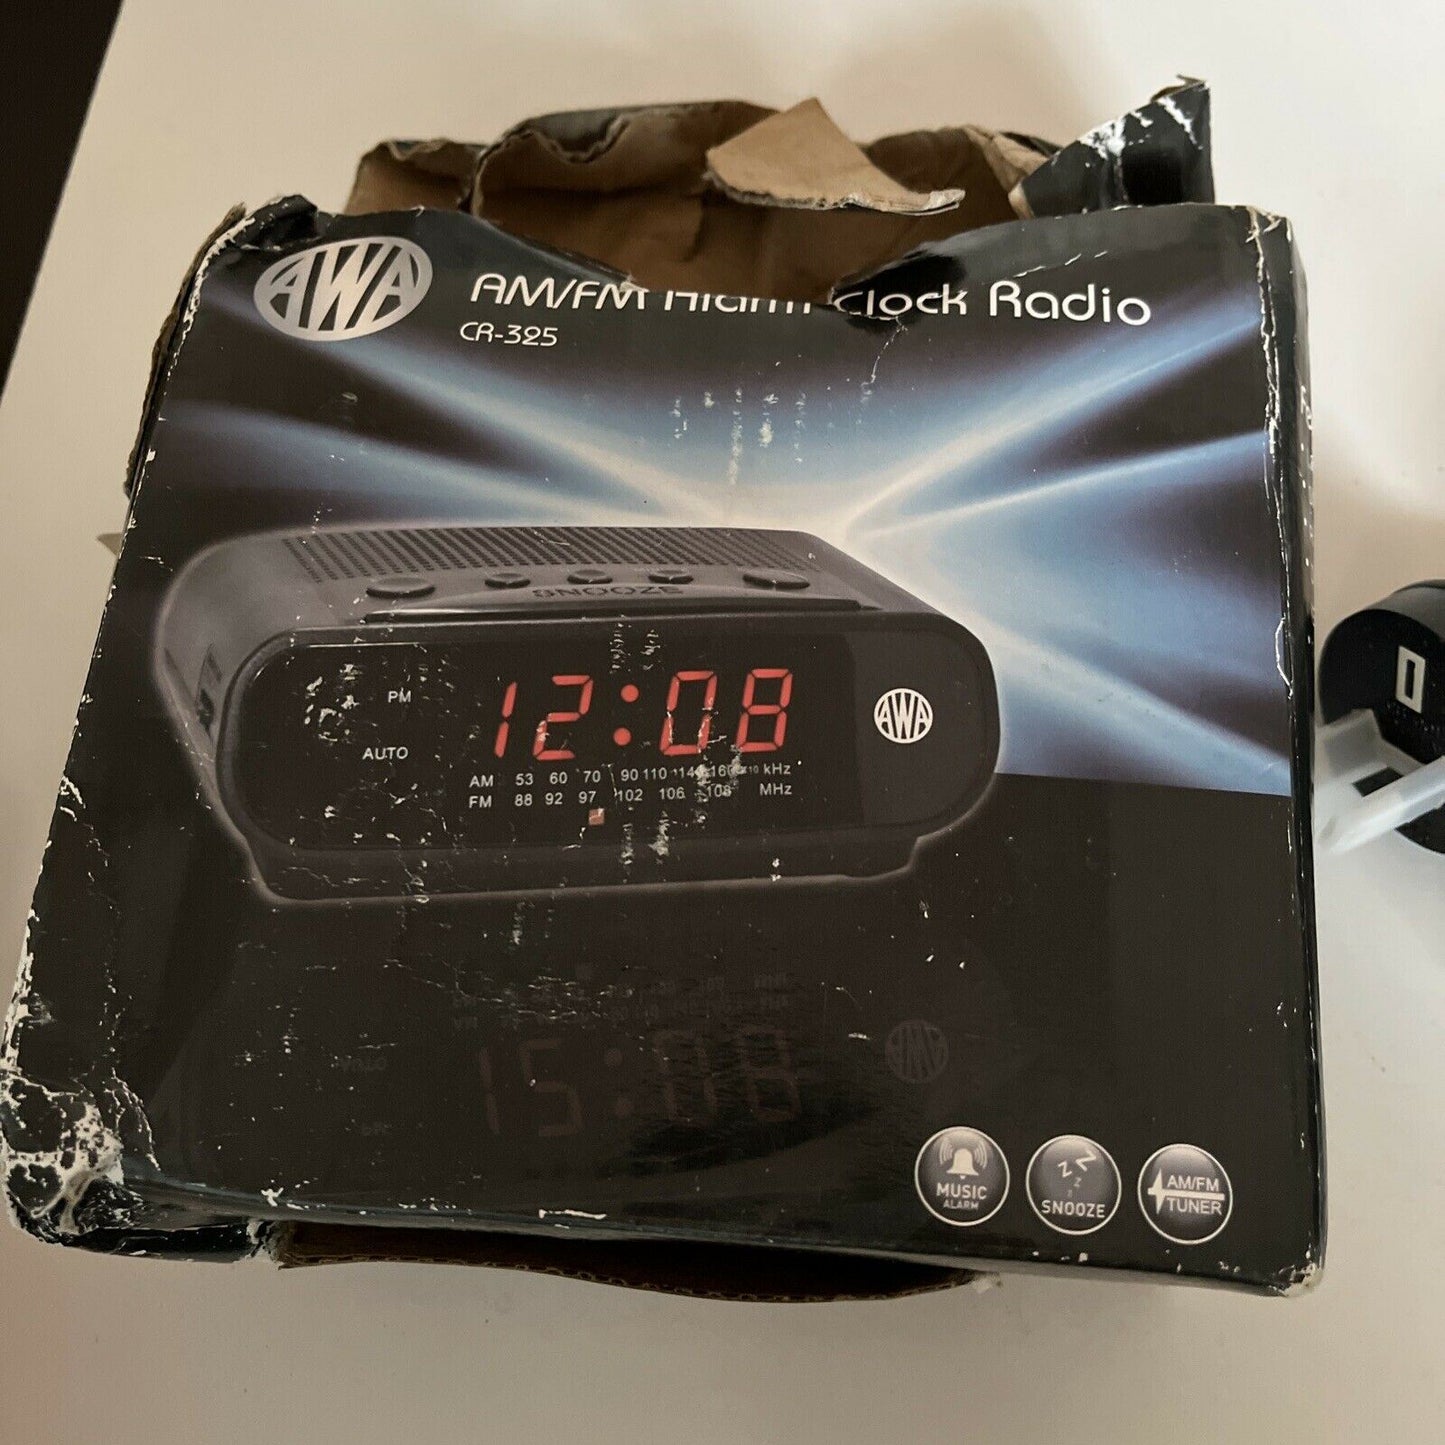 AWA AM/FM Alarm Clock Radio CR-325